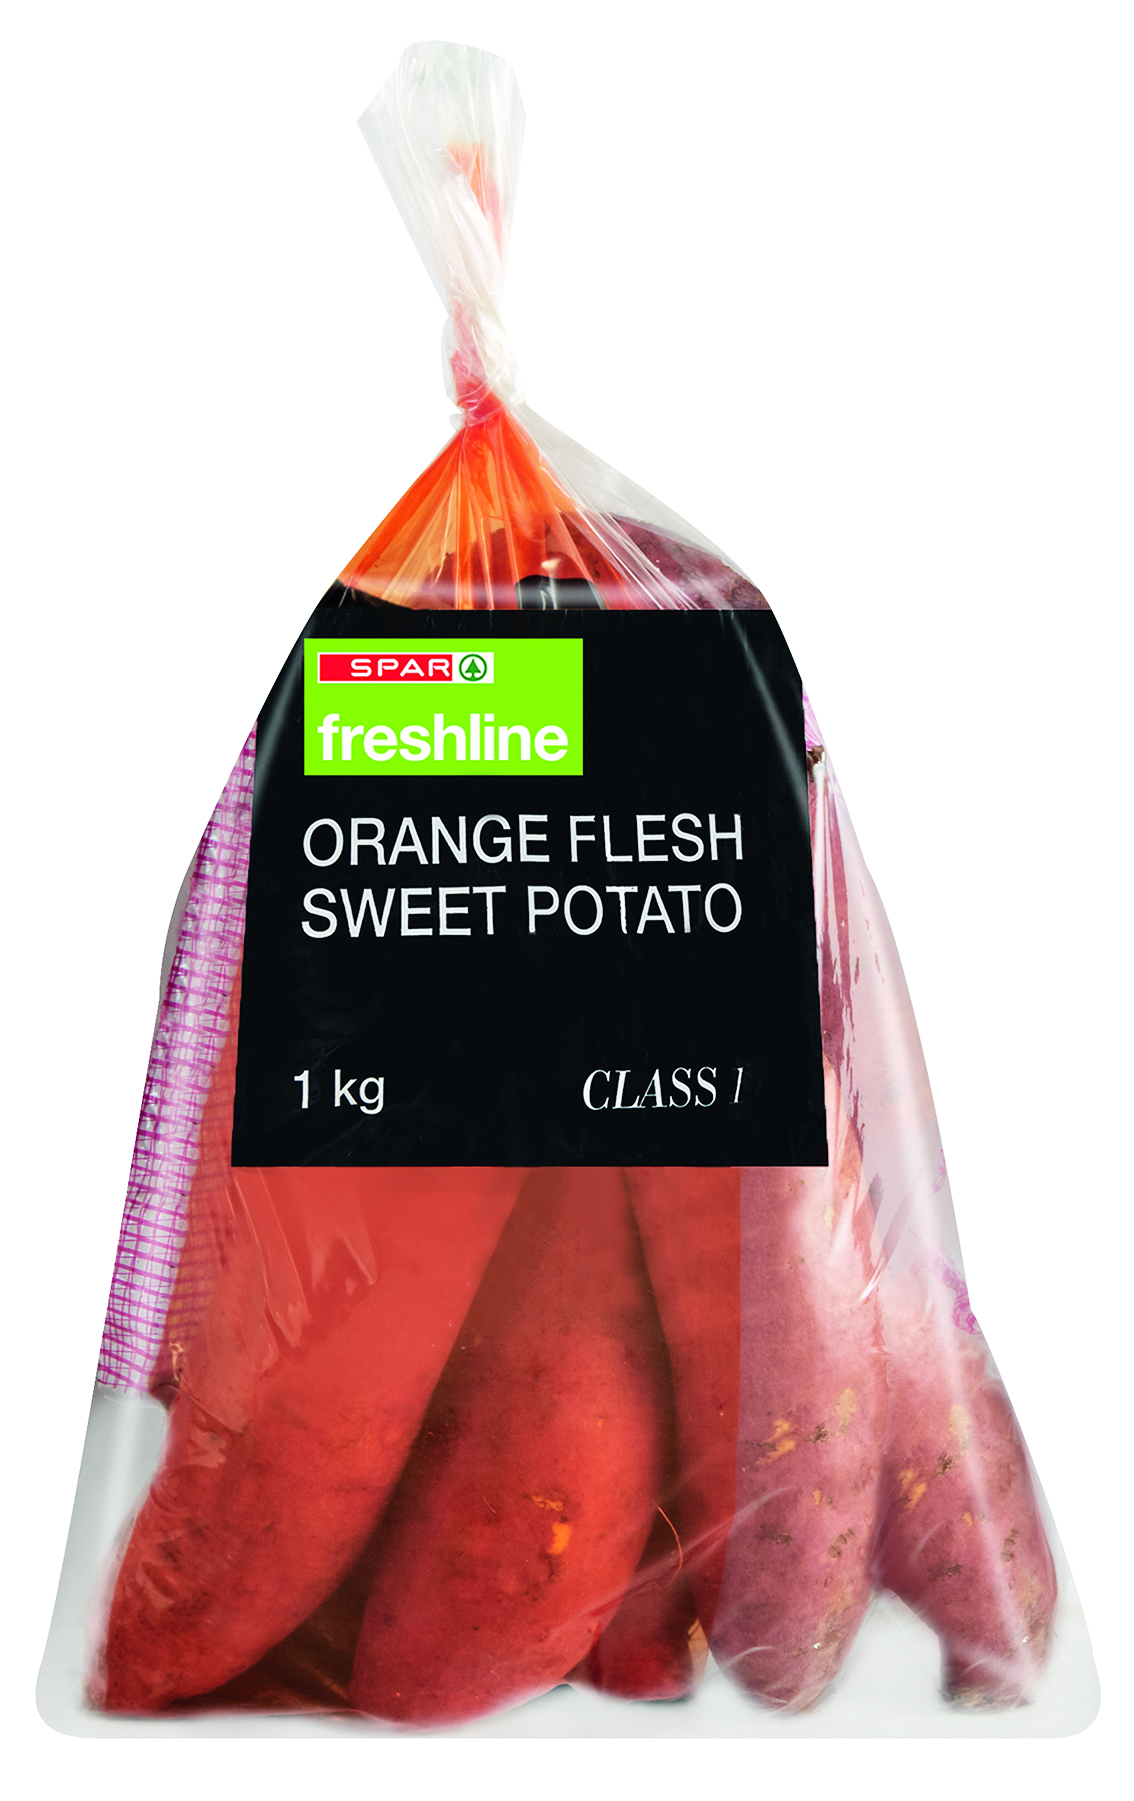 freshline orange flesh sweet potatoes  